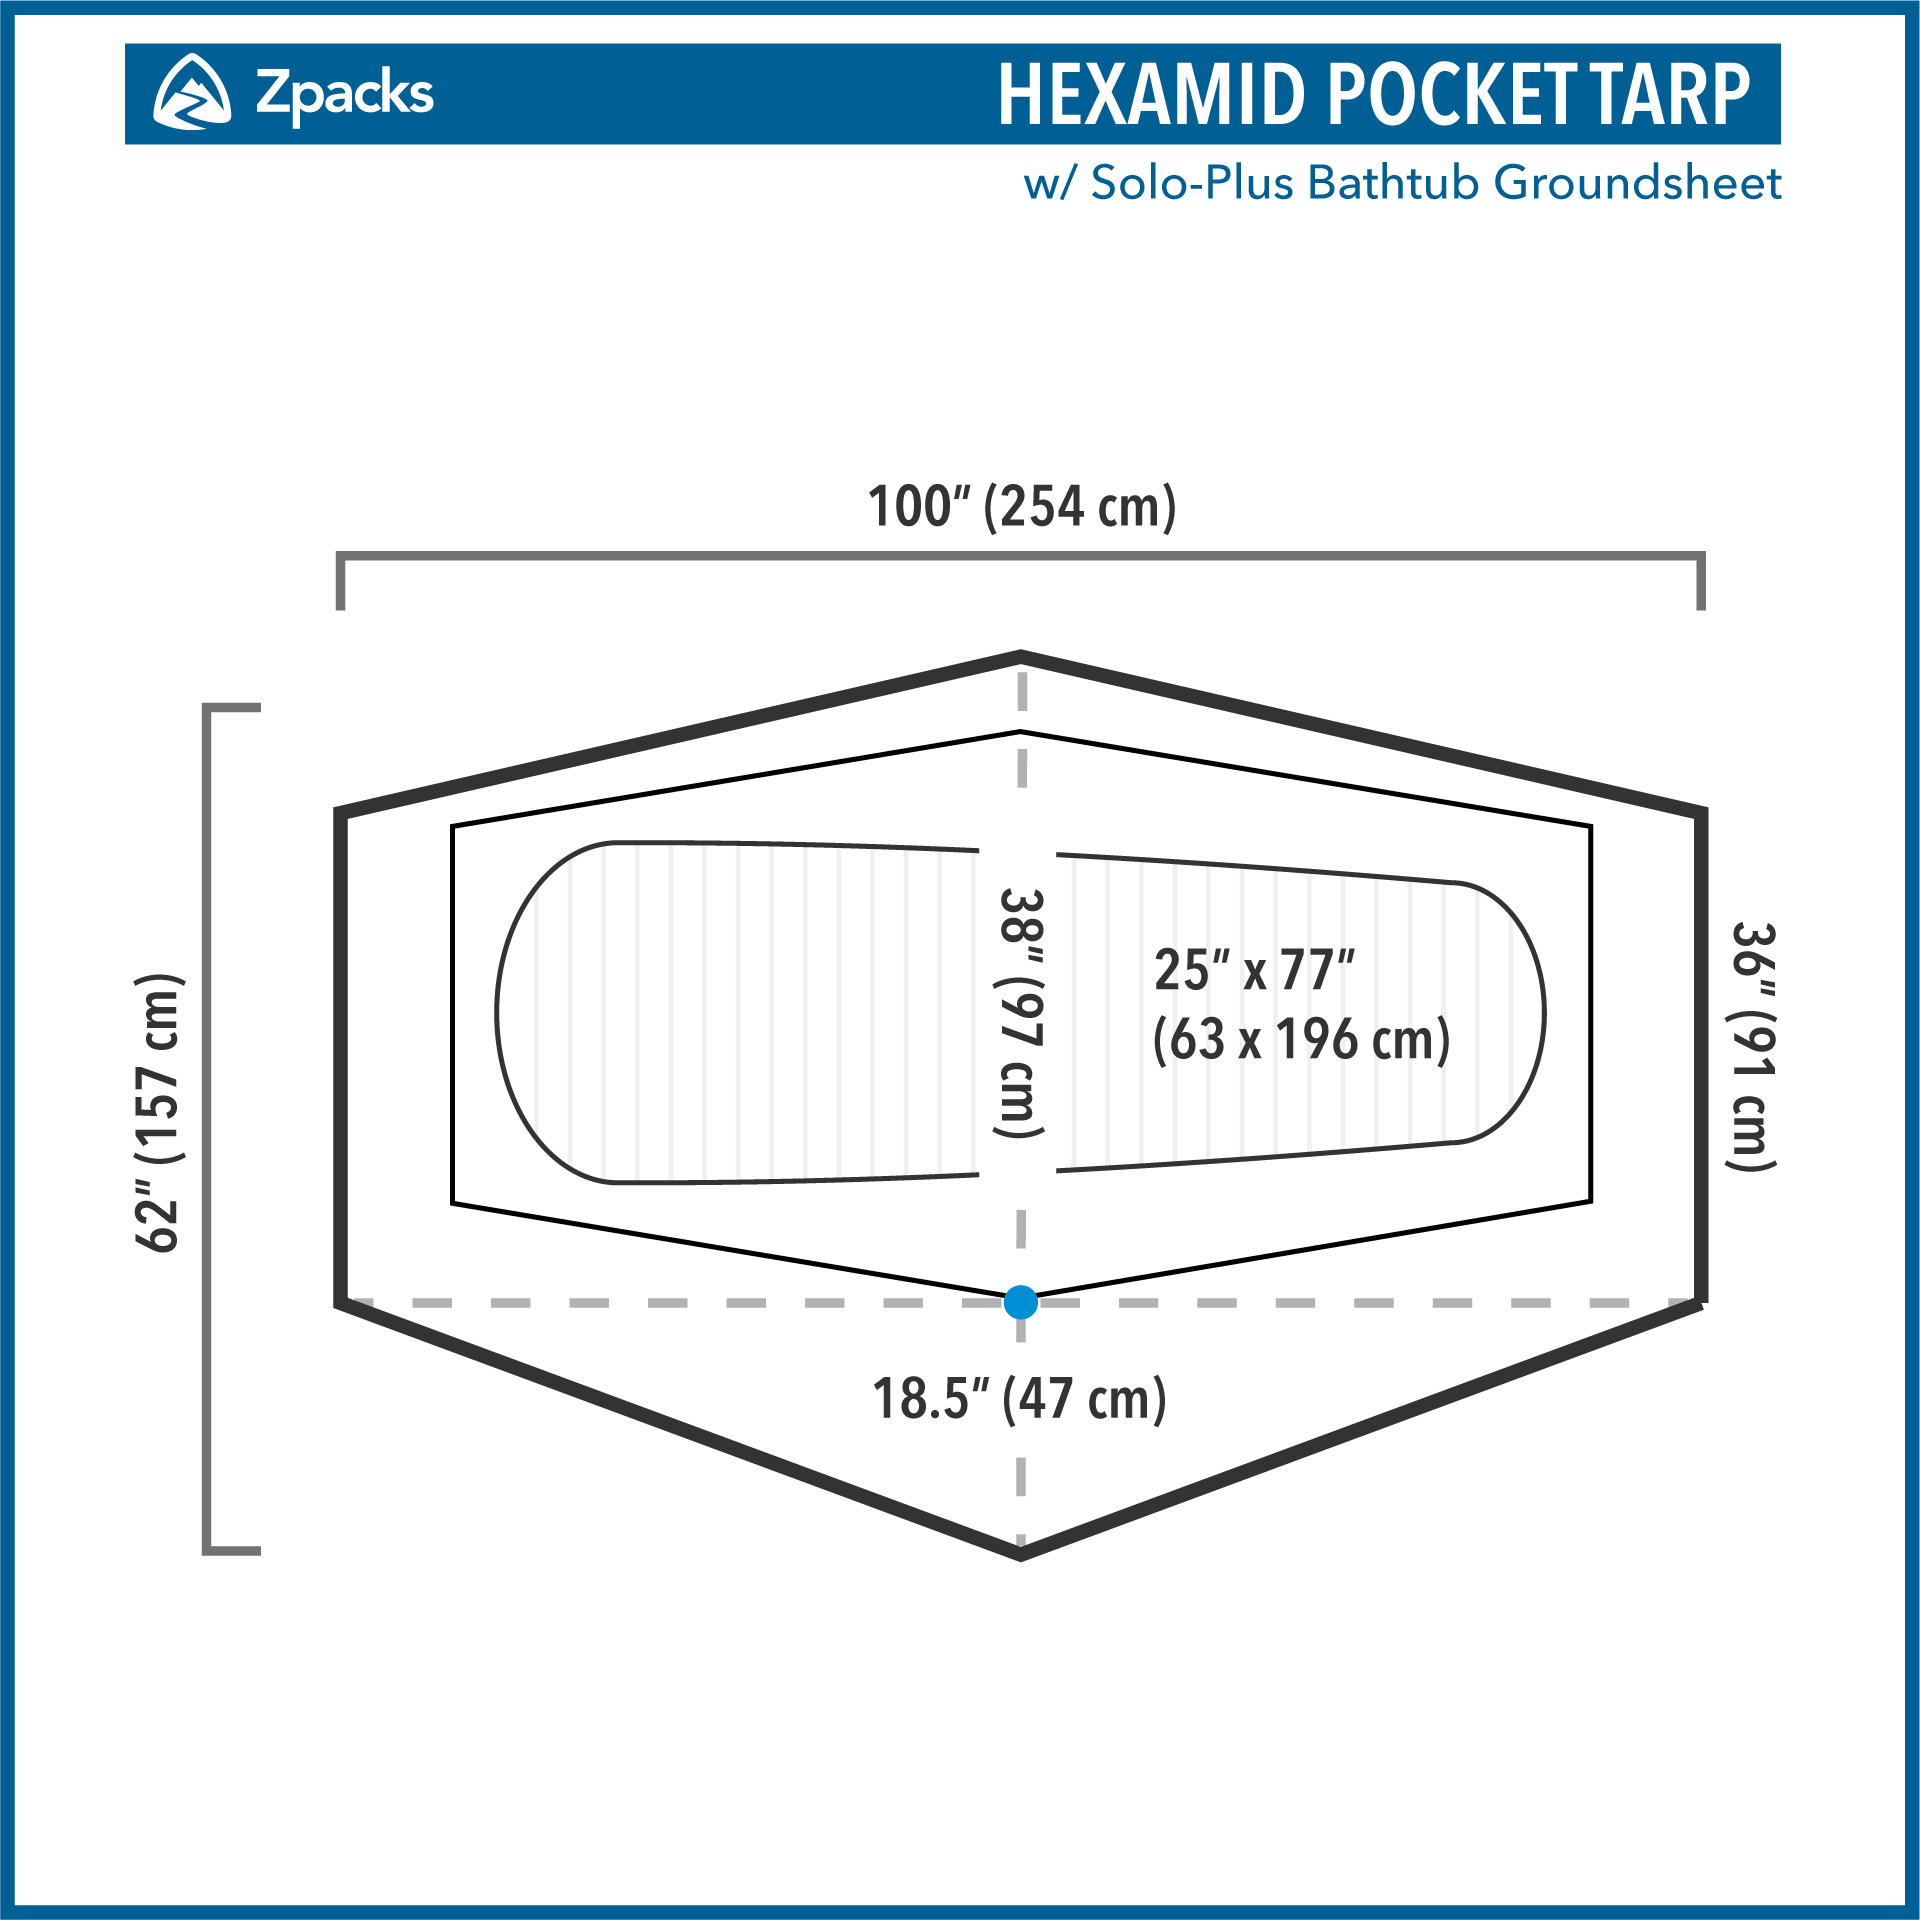 Hexamid Pocket Tarp - 1P UL Backpacking Shelter | Zpacks